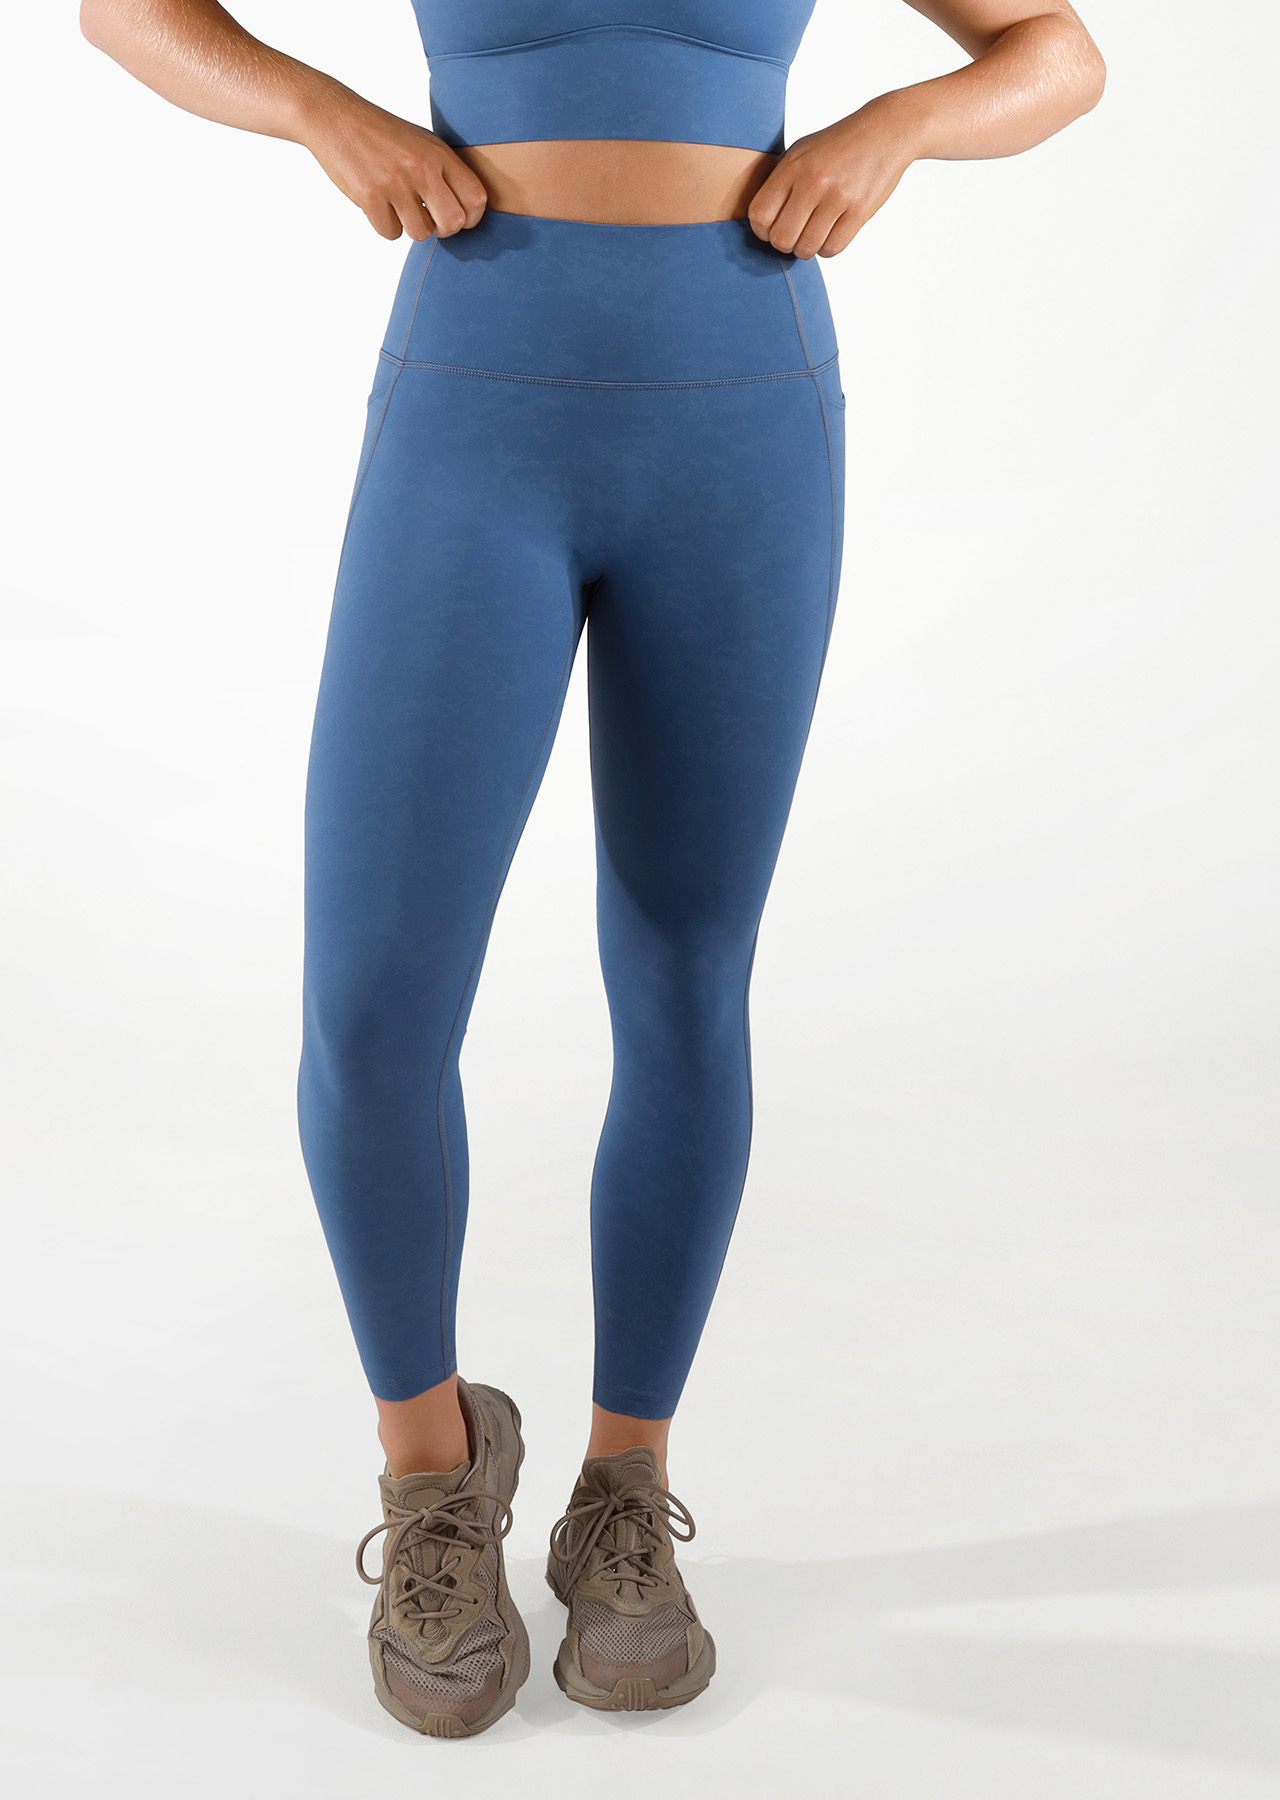 Buy New Balance Womens Space Dye 7/8 Running Tight Leggings